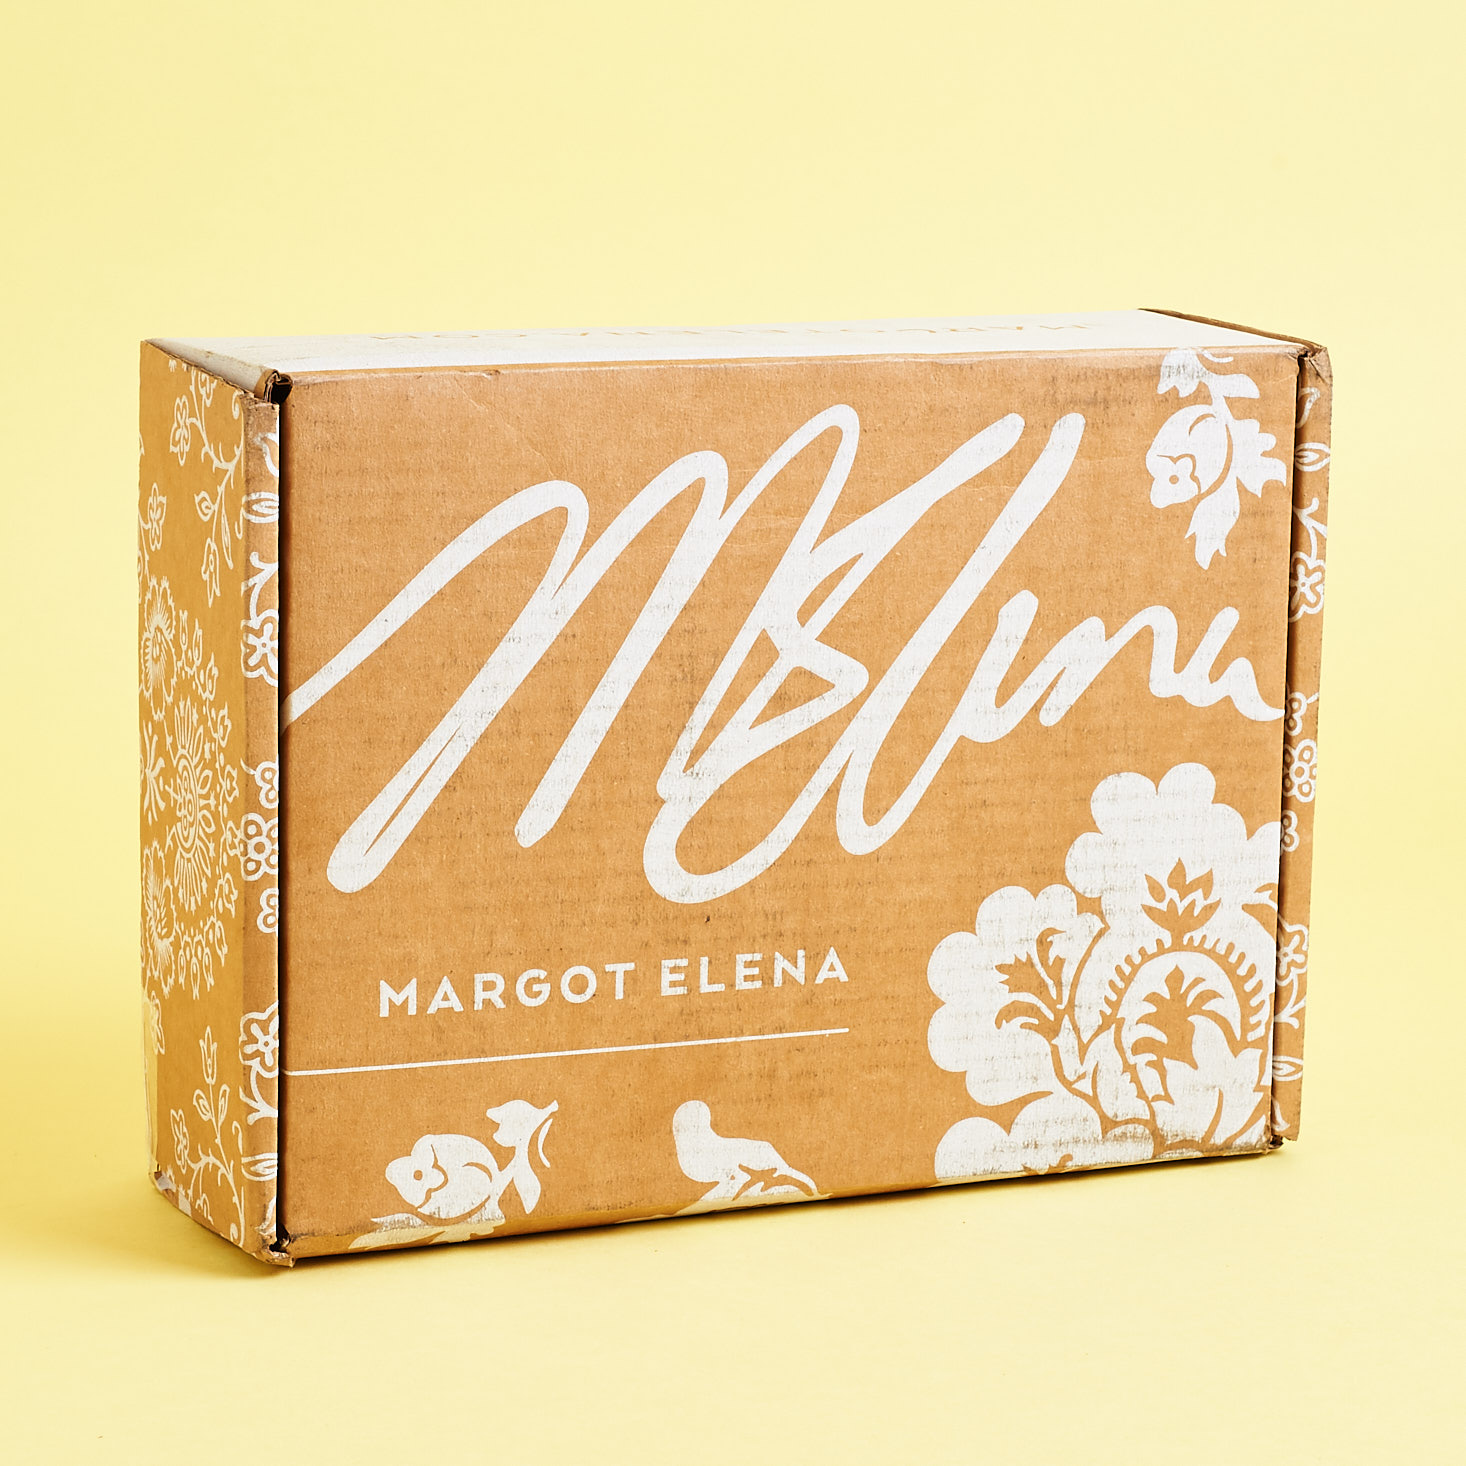 Margot Elena Subscription Box – Summer 2019 Review